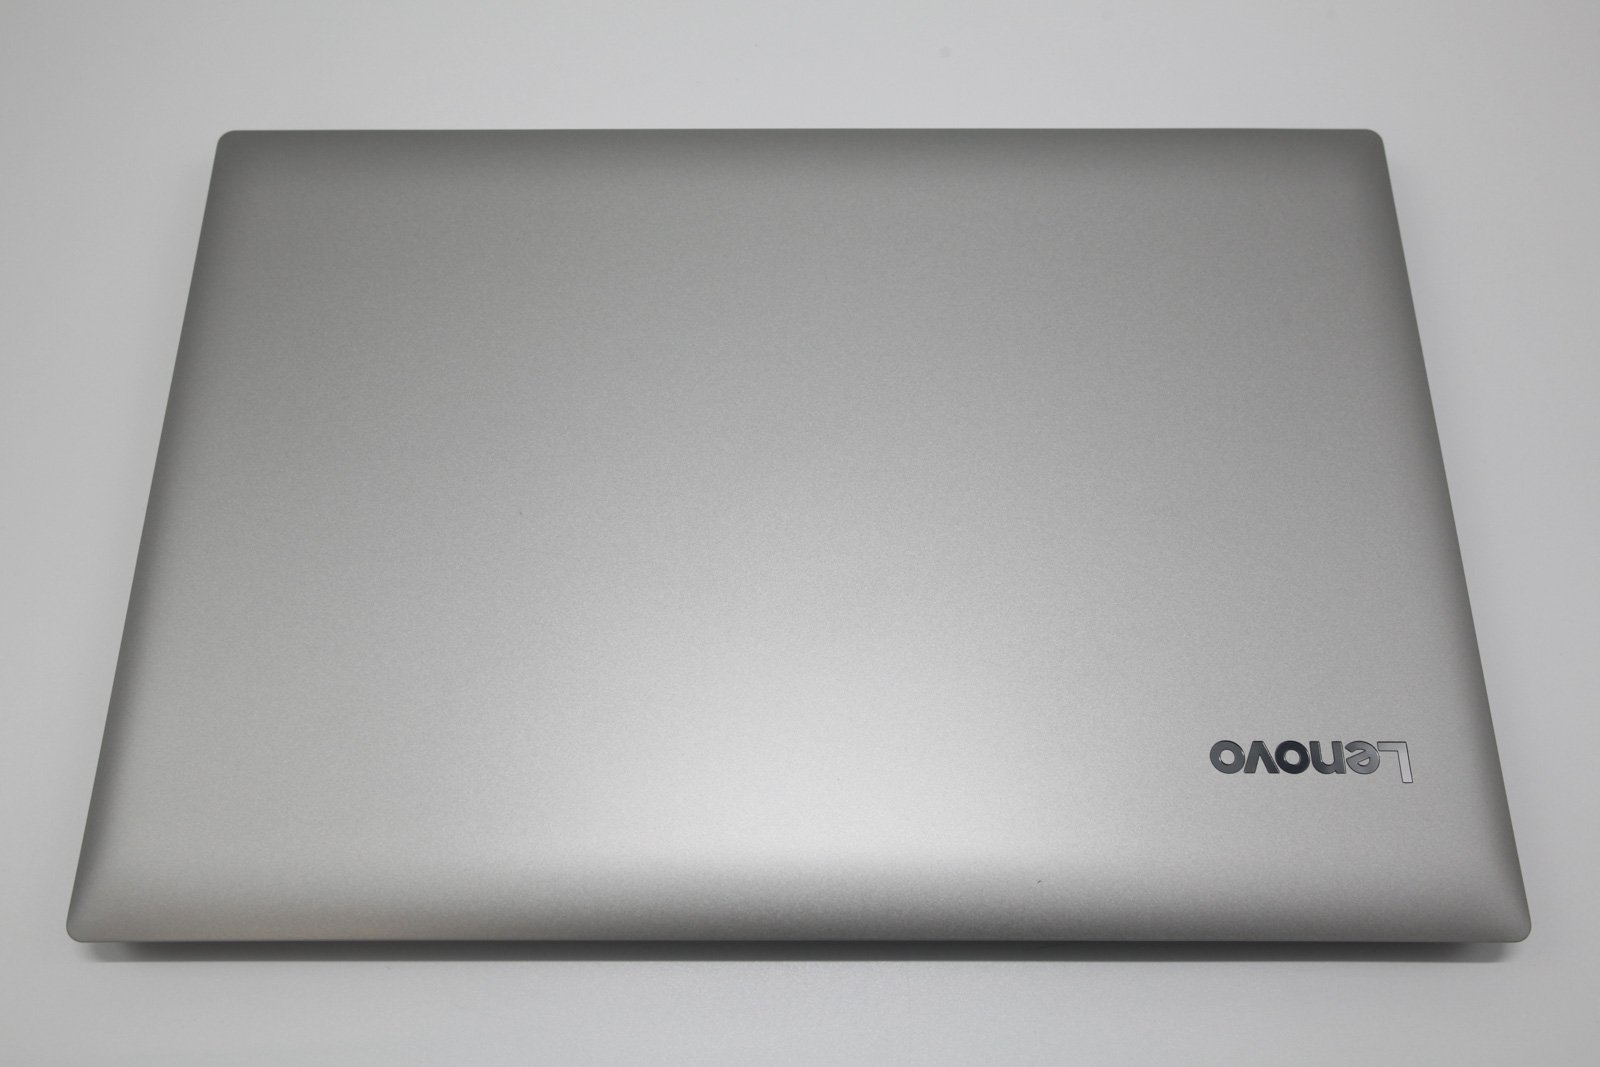 Lenovo IdeaPad 320 17.3" Laptop: i3-7100U 7th Gen, 8GB RAM, 240GB SSD, Warranty - CruiseTech